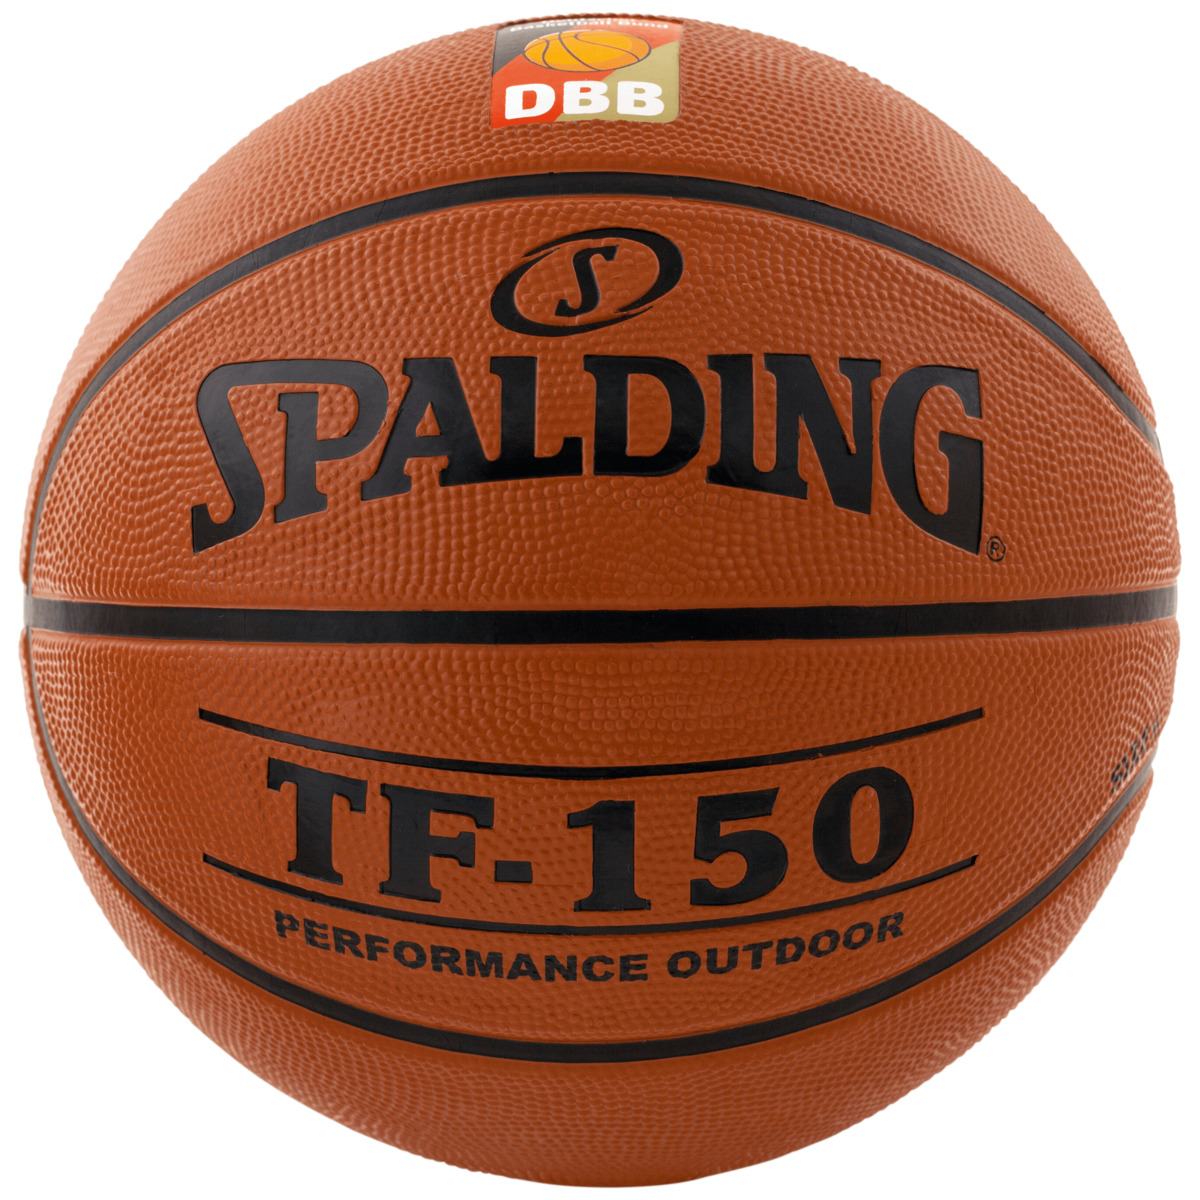 Spalding Basketball TF150 DBB Size 5